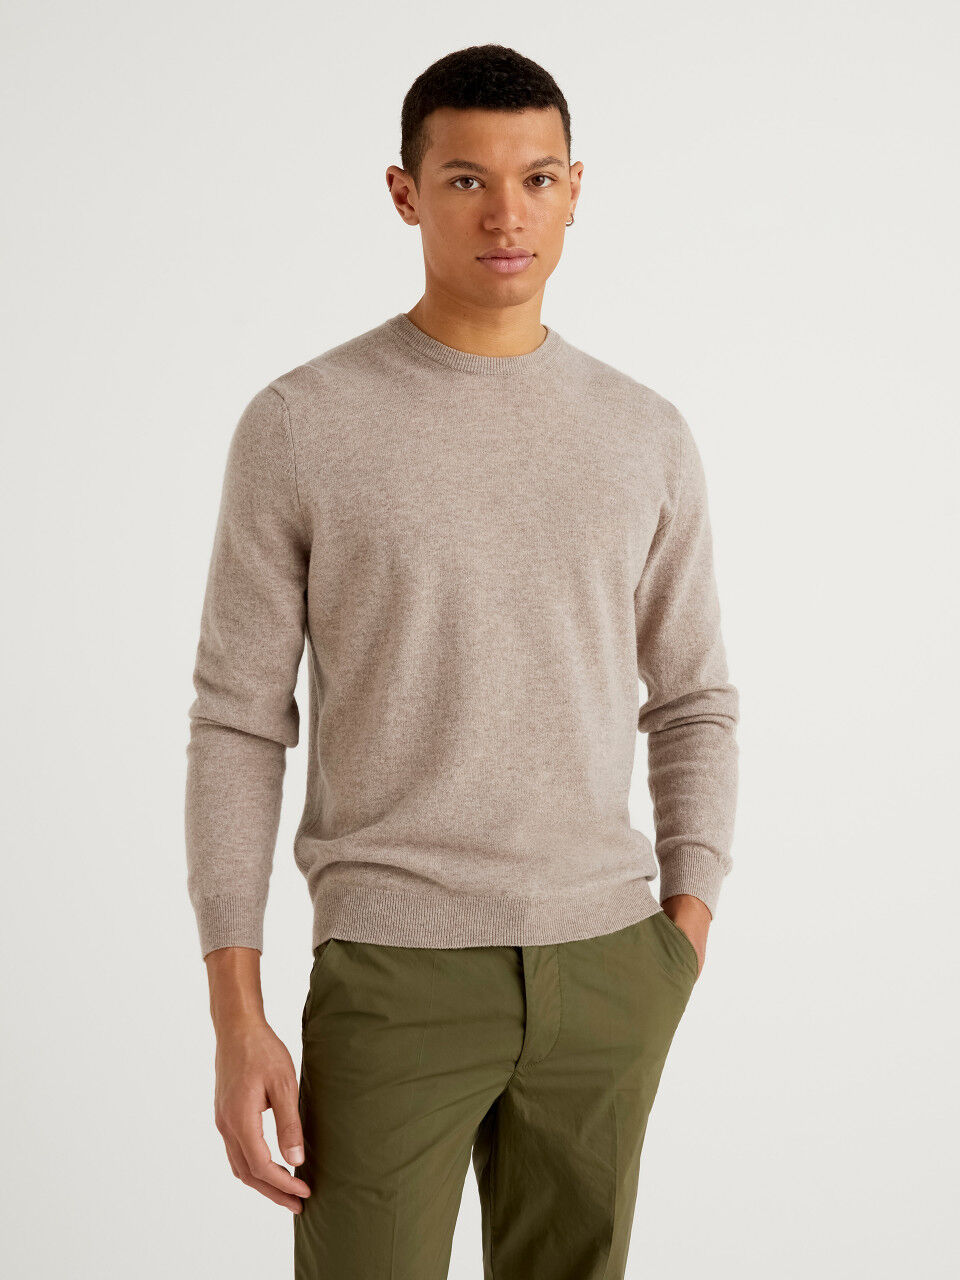 Dove gray crew neck sweater in pure Merino wool